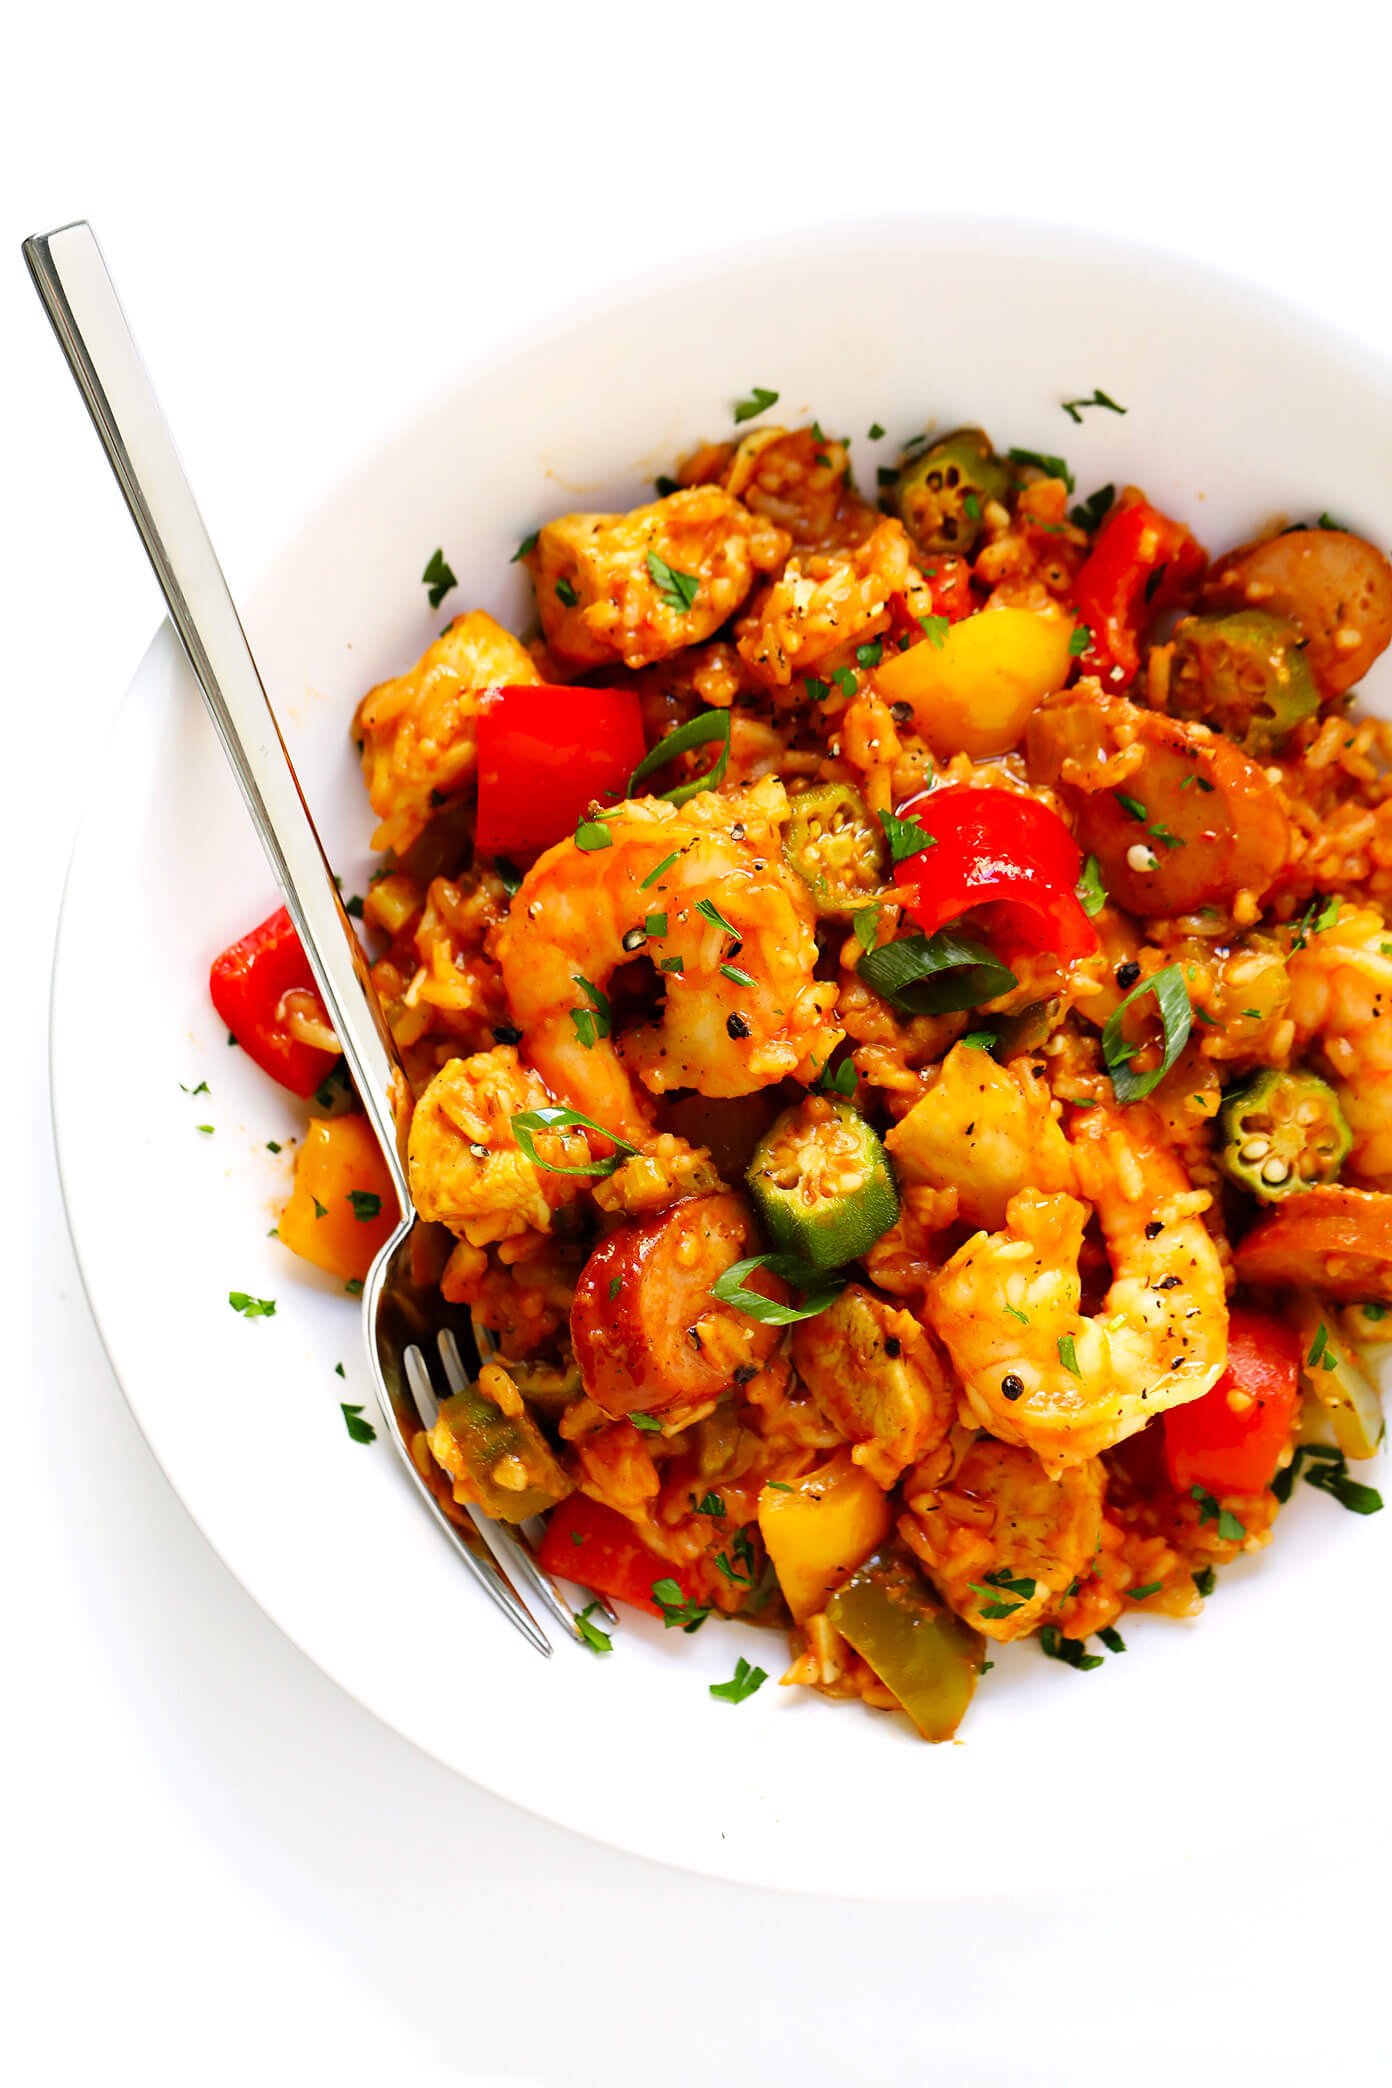 https://www.gimmesomeoven.com/wp-content/uploads/2014/03/Cajun-Jambalaya-Recipe-with-Andouille-Sausage-Shrimp-and-Chicken-7.jpg